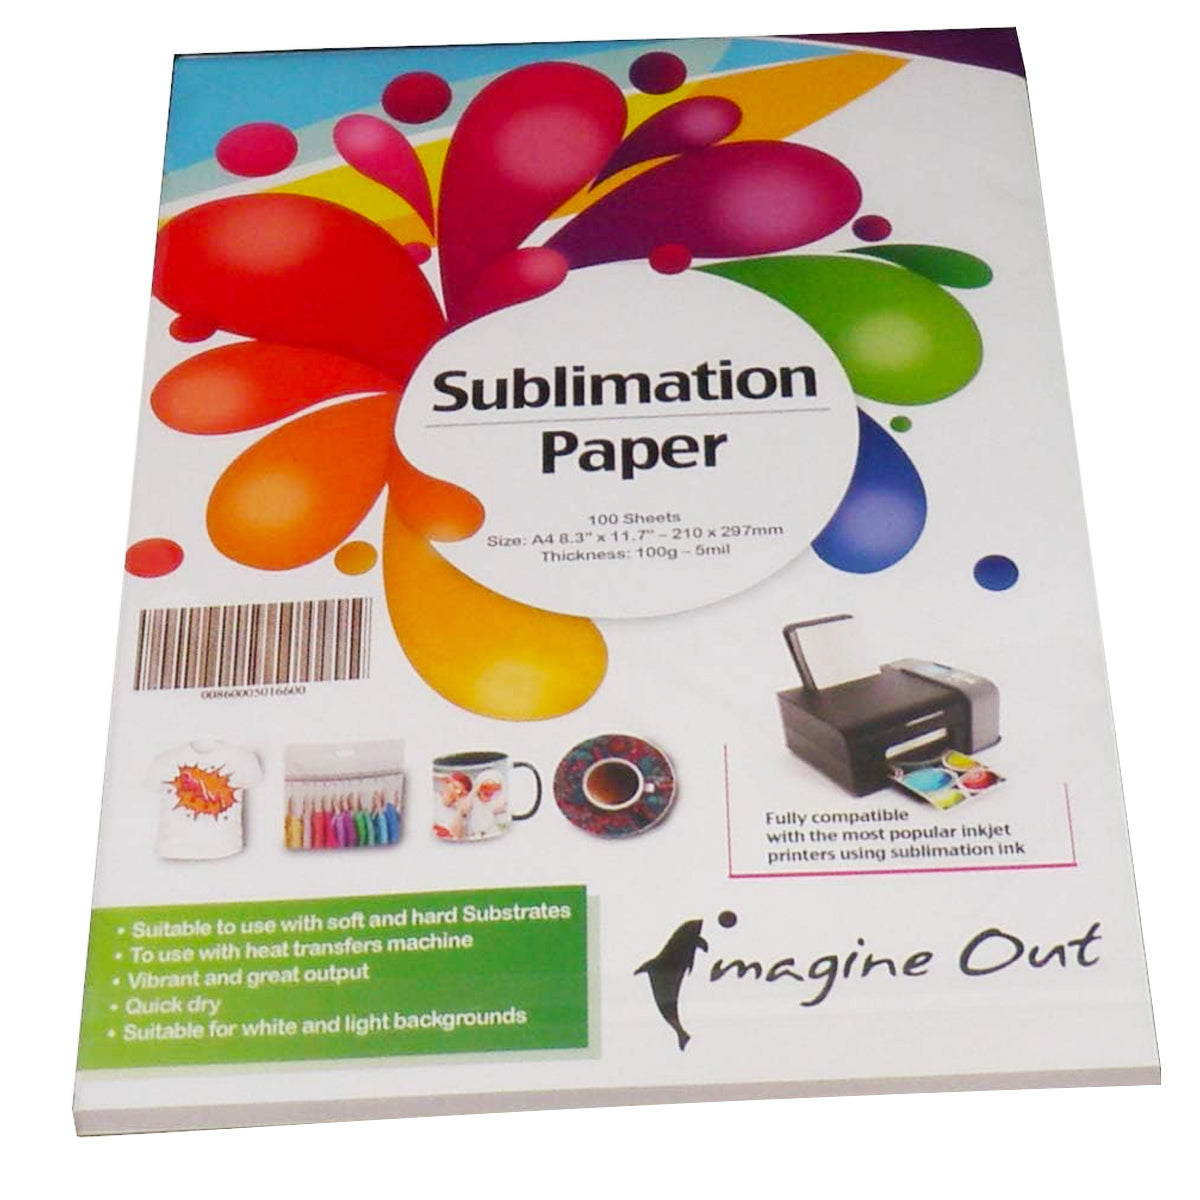 Sublimation Paper - 100 sheets